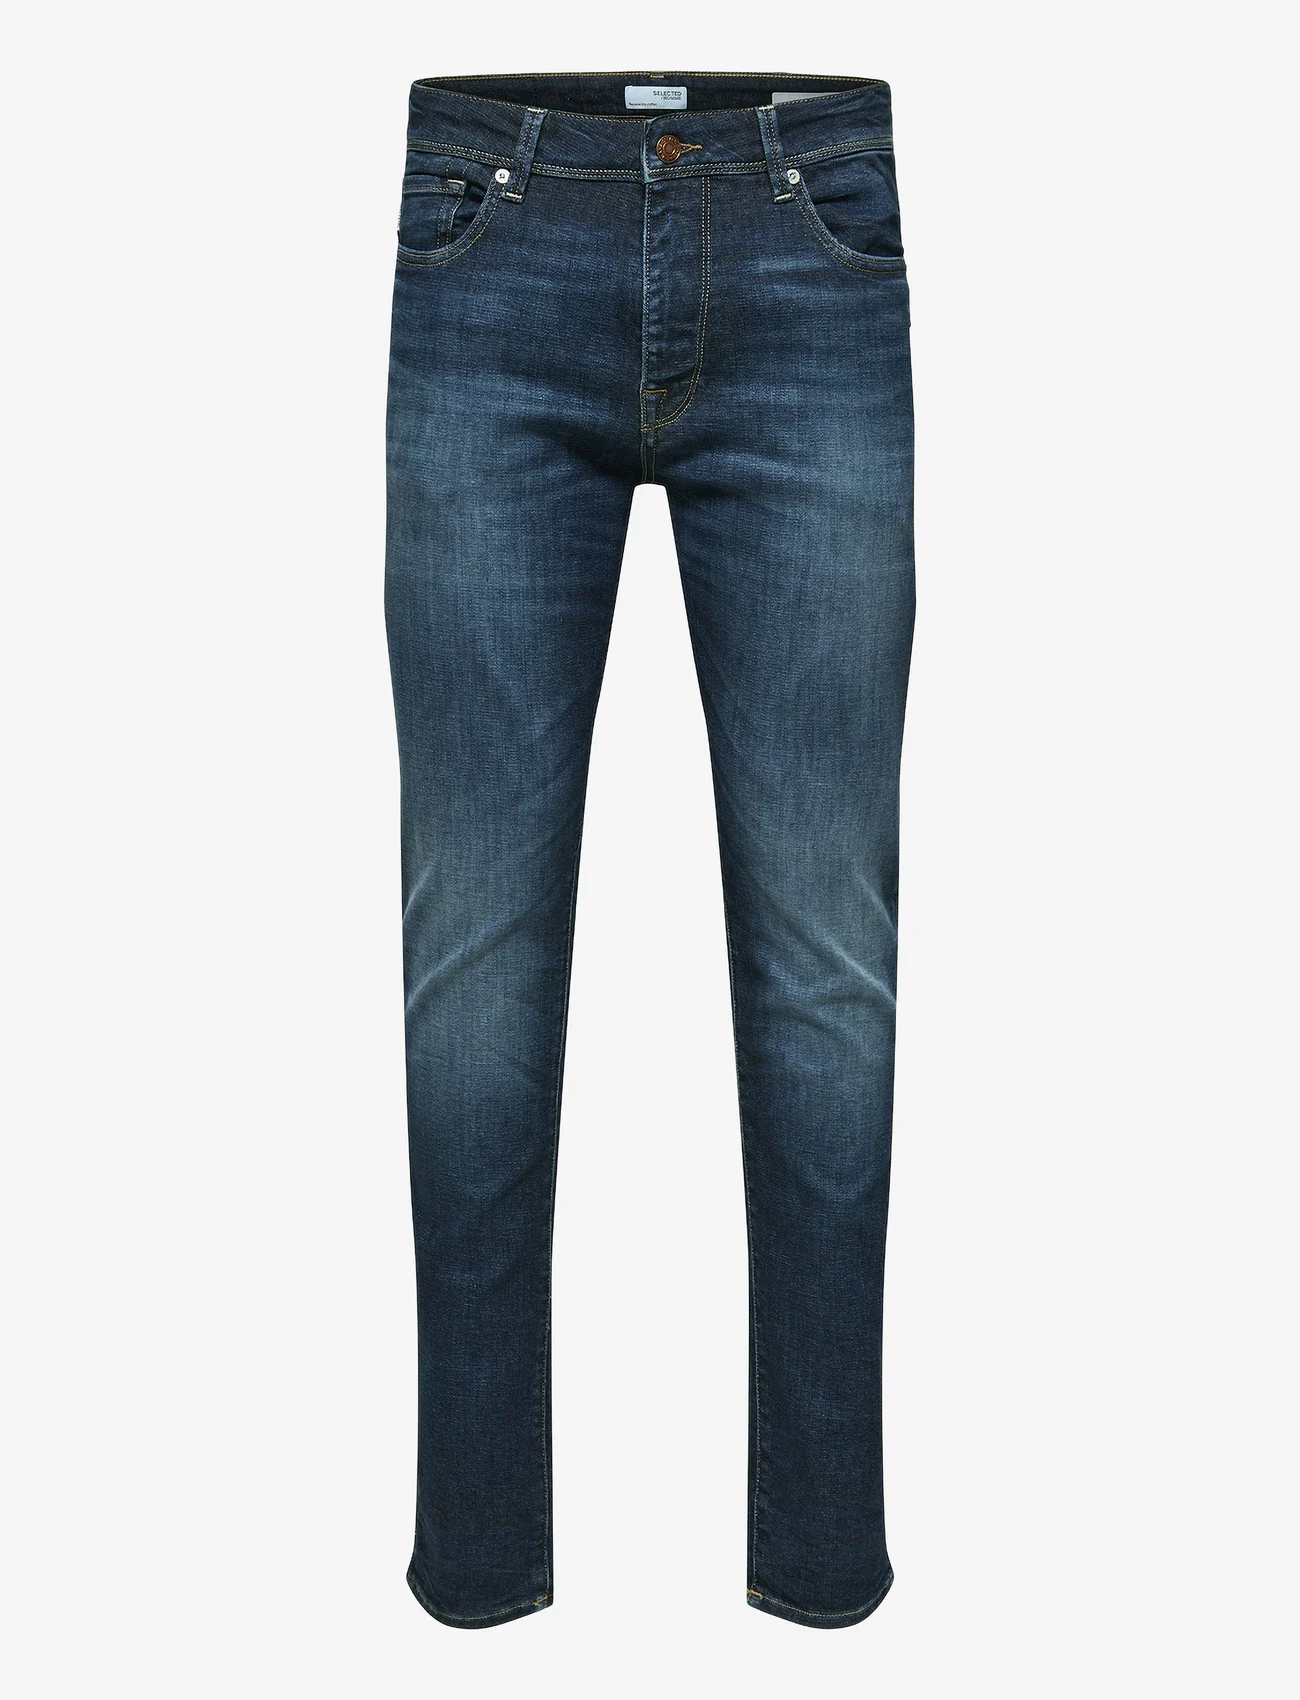 Selected Homme - SLH175-SLIMLEON 31604 D.BLUE SOFT NOOS - slim jeans - dark blue denim - 0